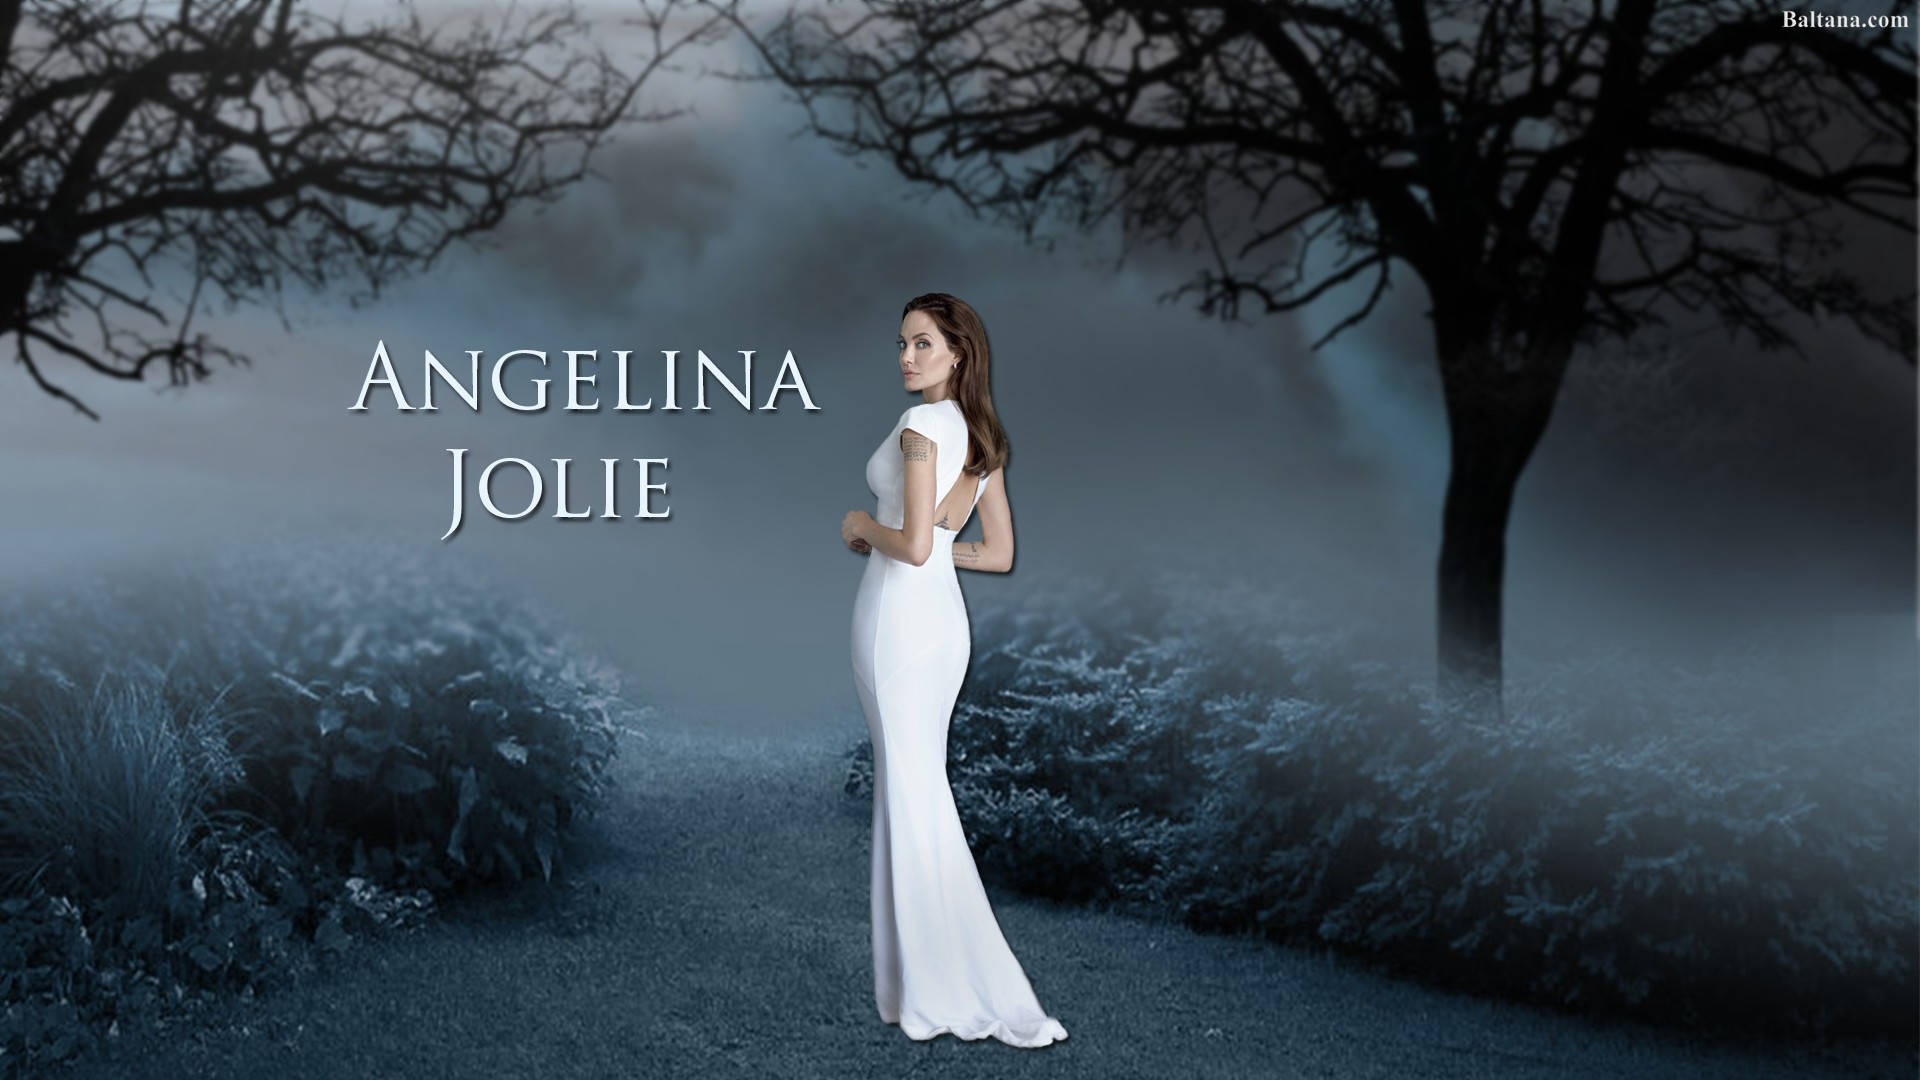 Angelina Jolie Forest Fanart